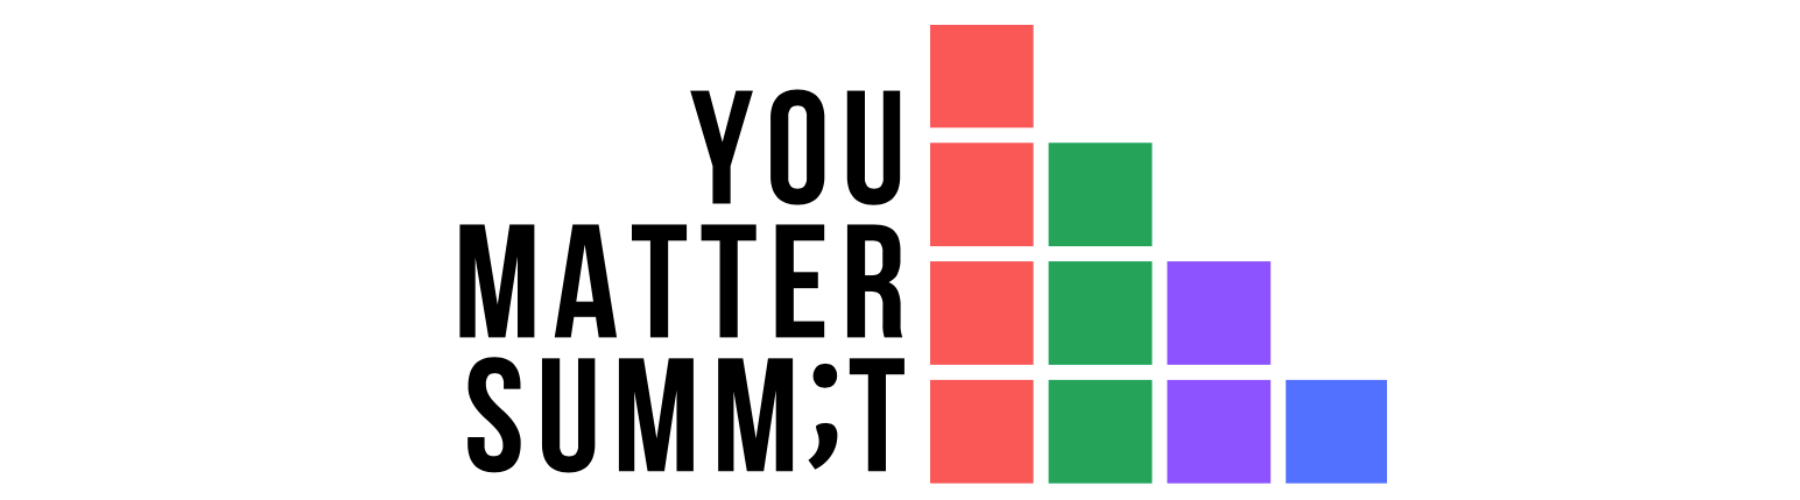 text you matter summit logo